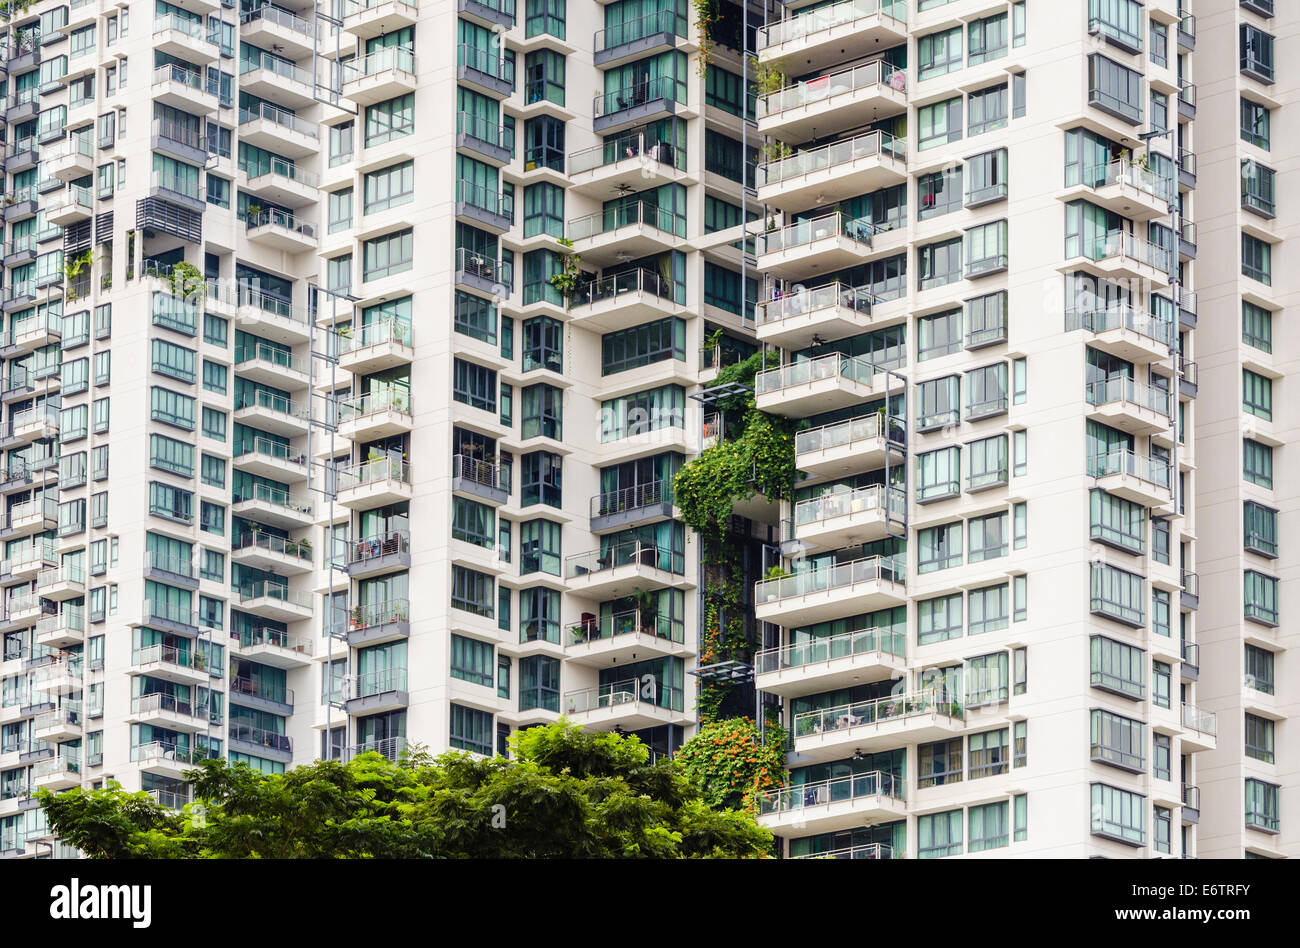 Singapore high-rise apartments Stock Photo